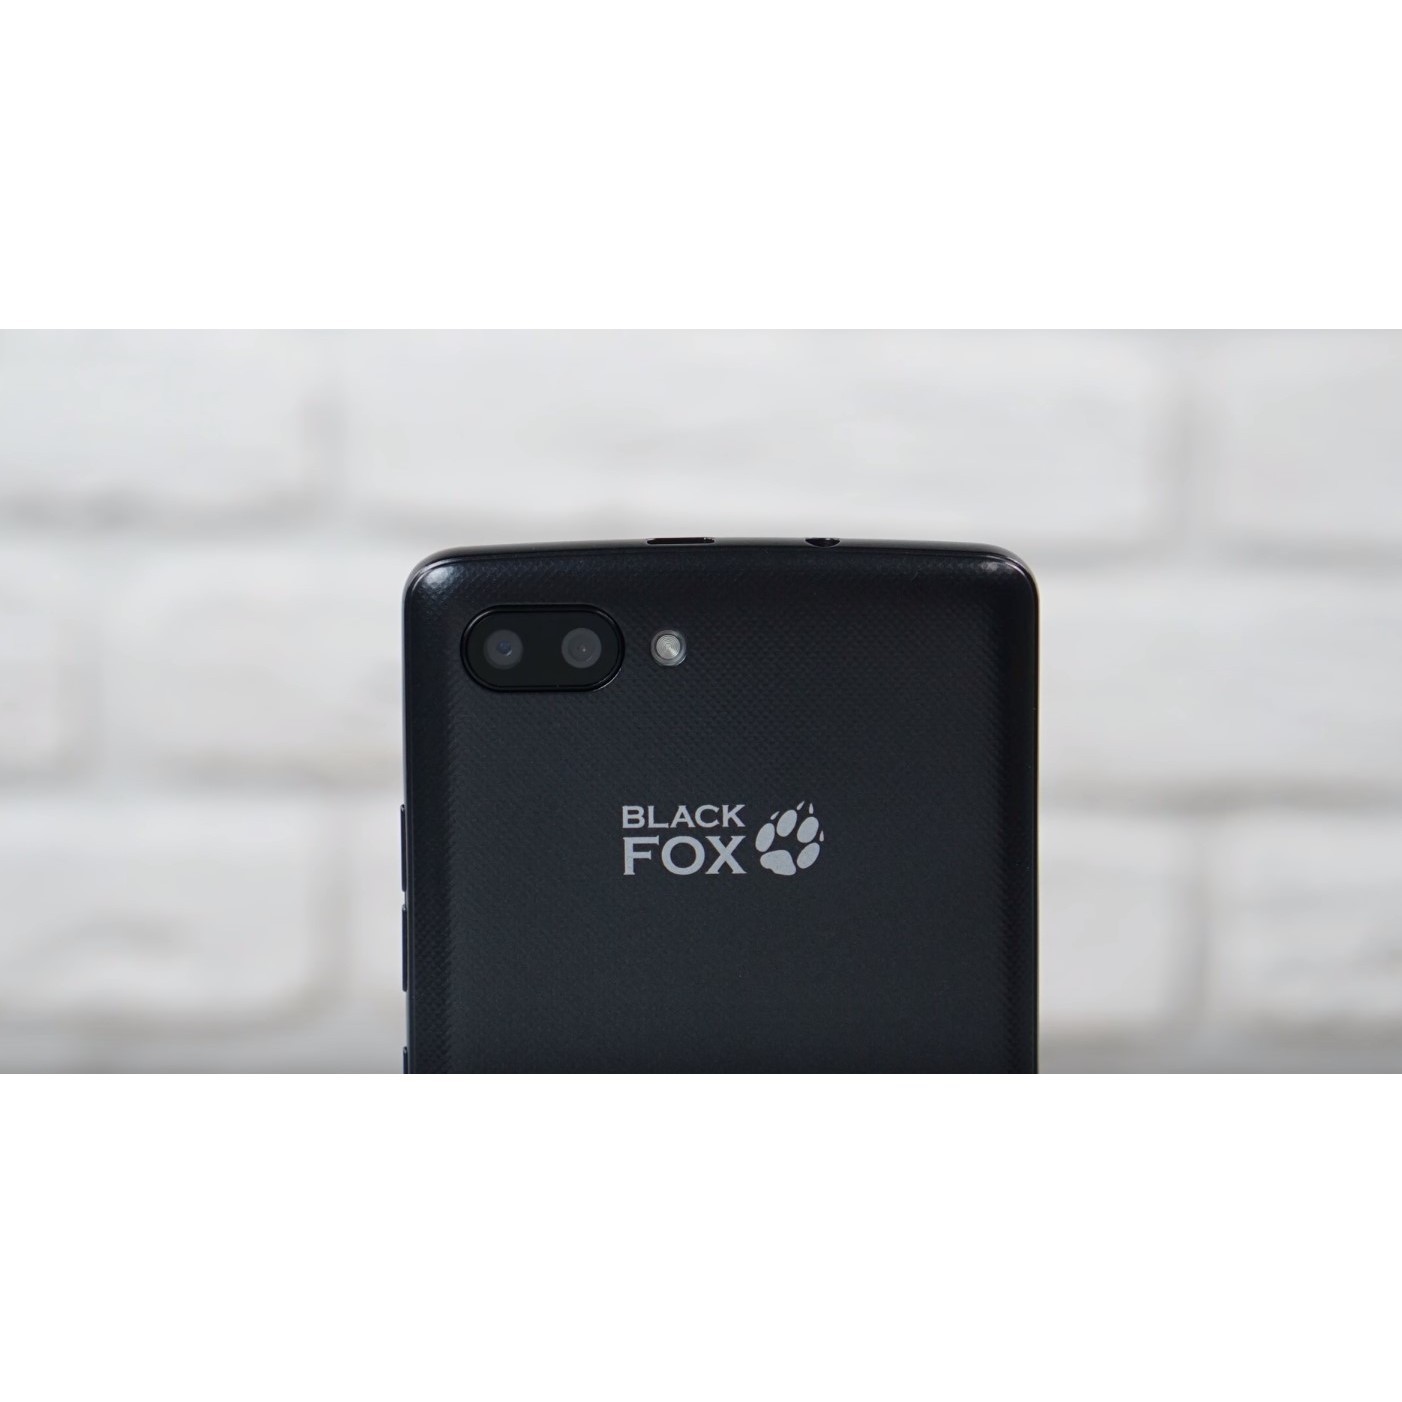 Fox b ru. Смартфон Black Fox b5. Black Fox bmm531a. Смартфон Black Fox BMM 541. Телефон Black Fox bmm531a.